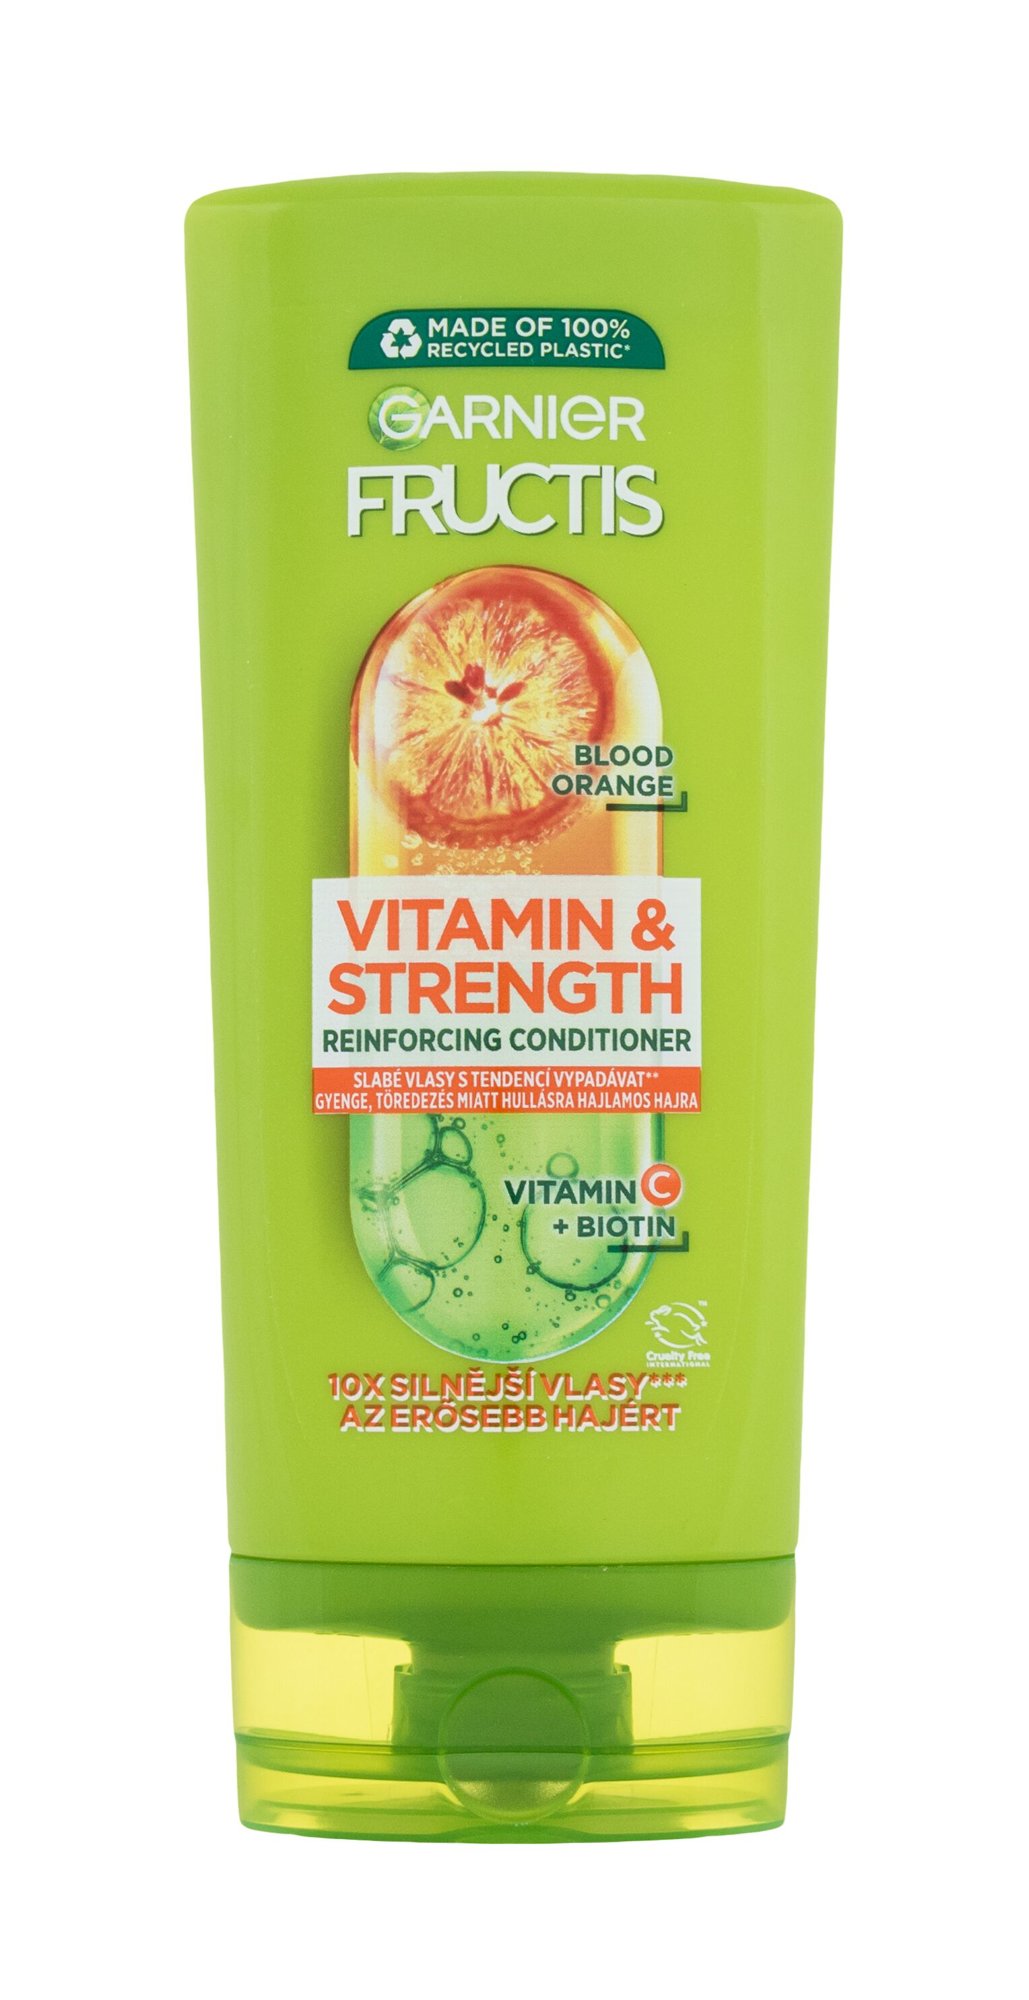 Garnier Fructis Vitamin & Strength Reinforcing Conditioner kondicionierius